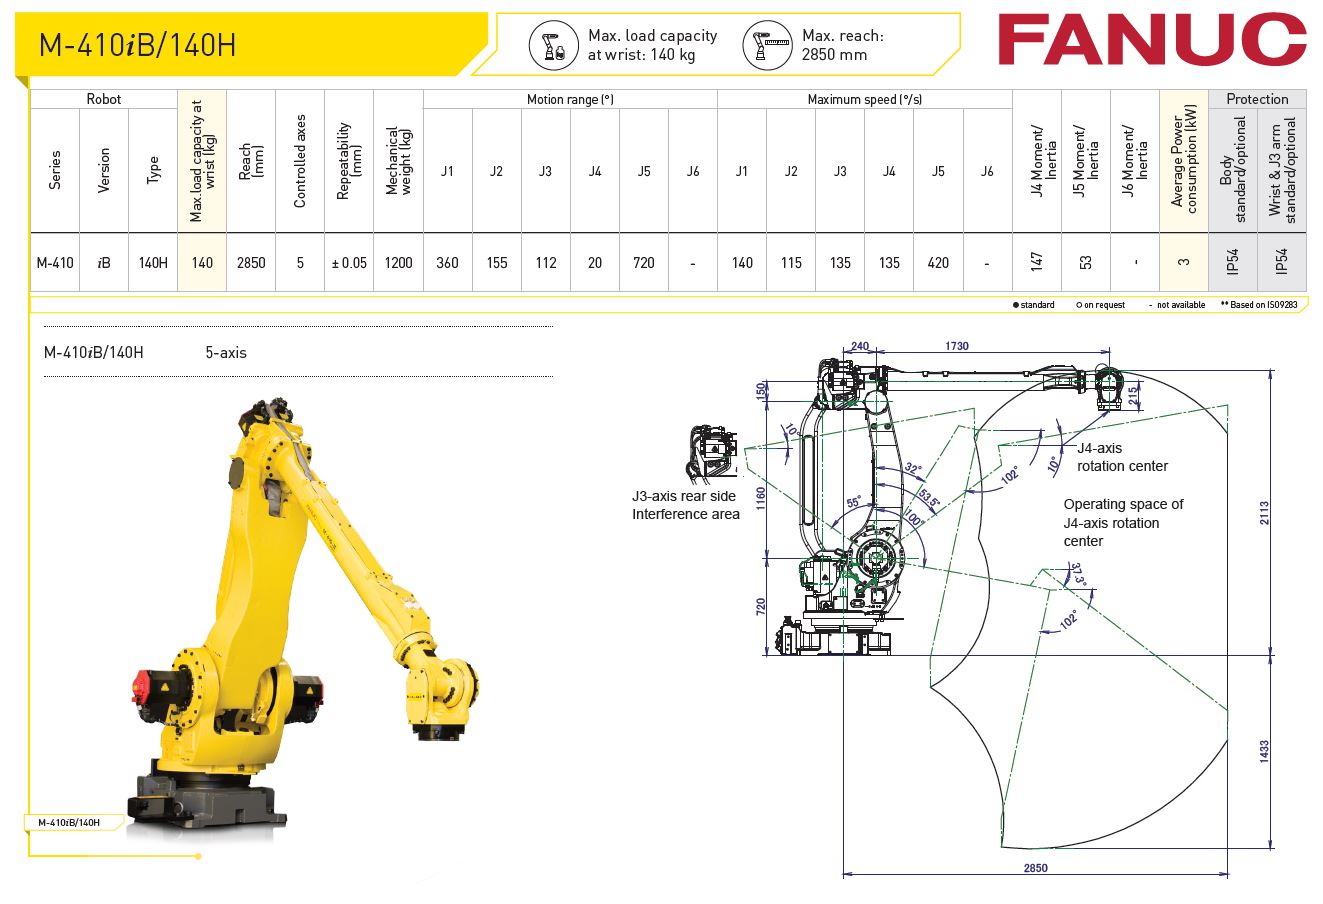 M-410iB-140H Fanuc Robot Specifications - RobotWorld